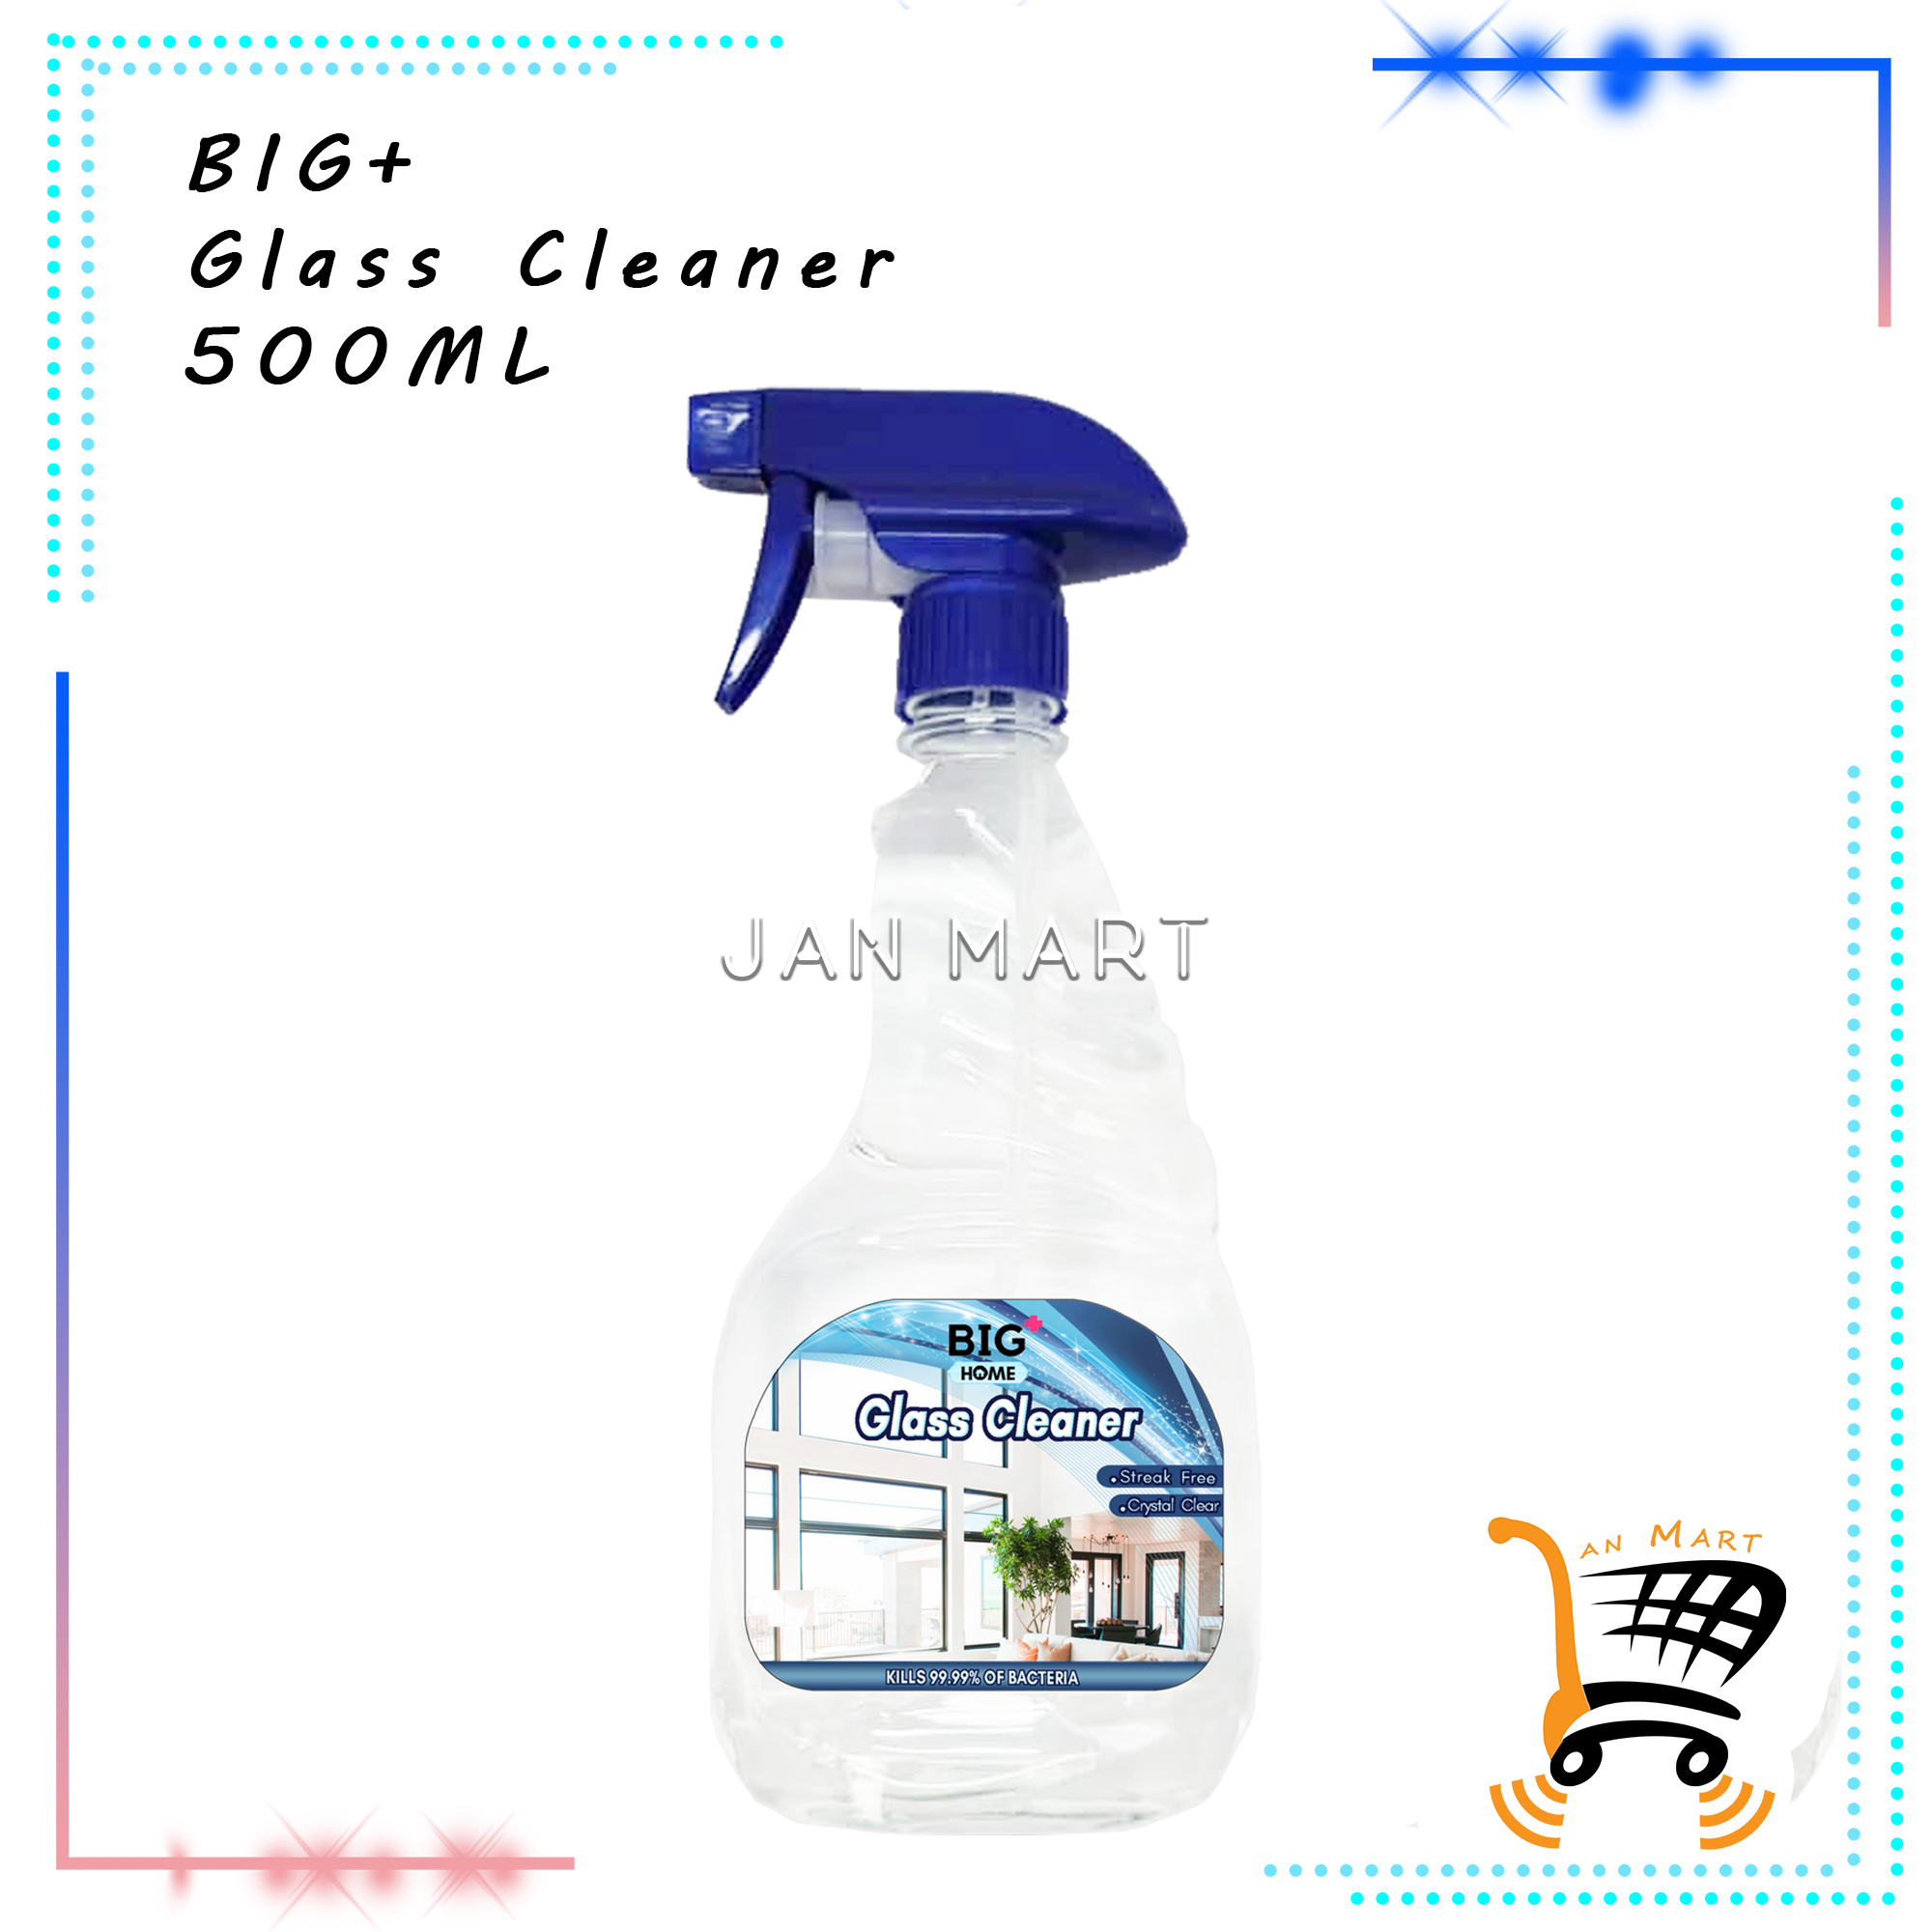 BIG+ Glass Cleaner 500ML